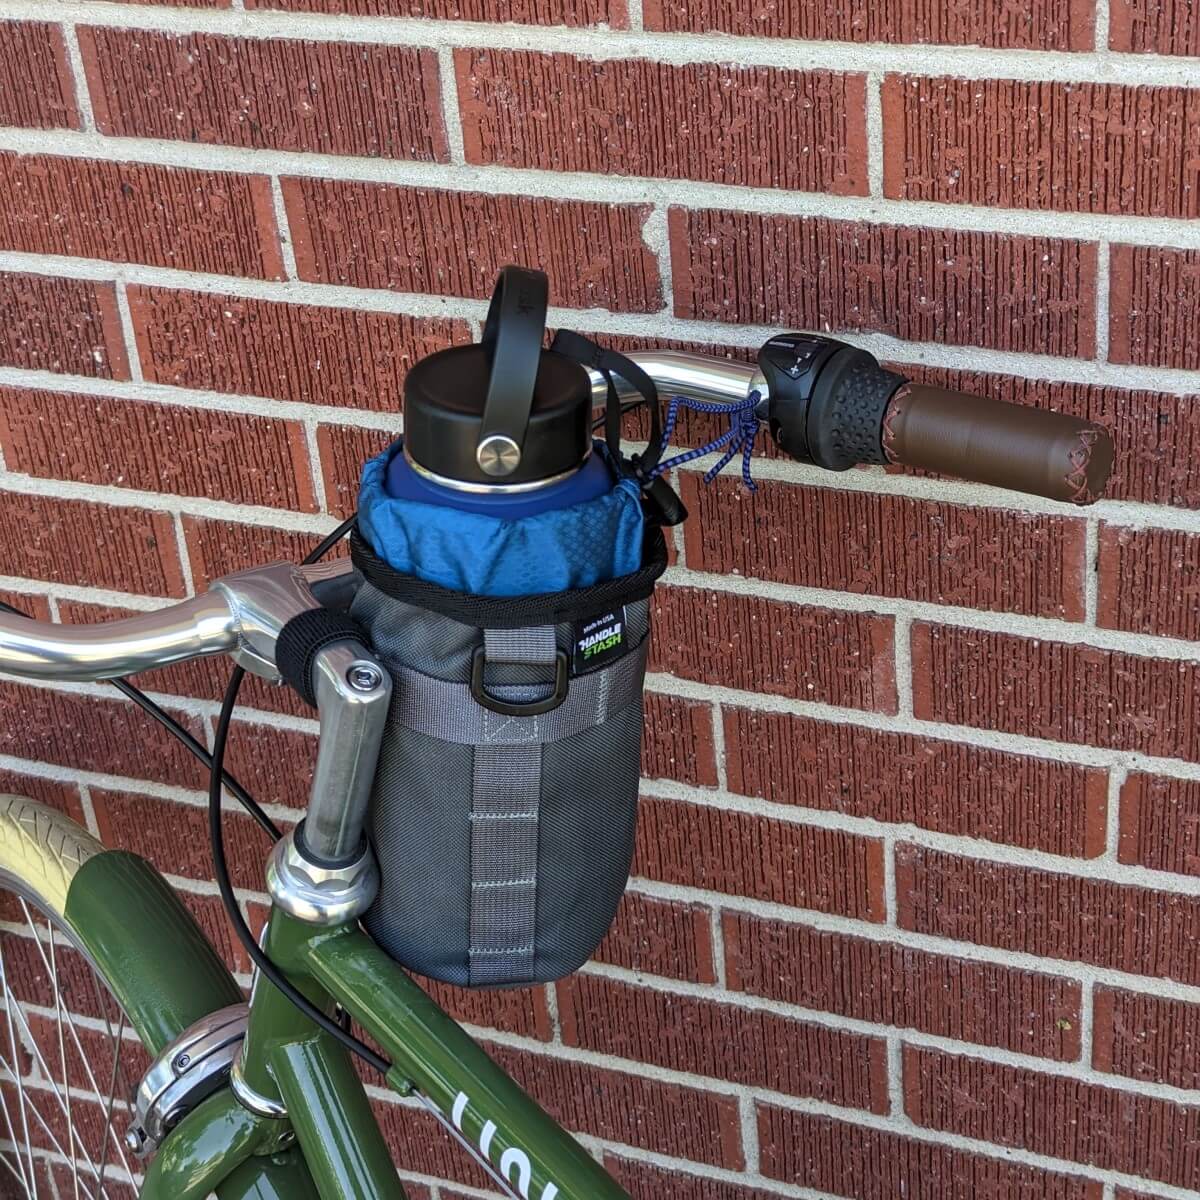 Grey stem bag with navy blue liner on bike holding a large water bottle. 